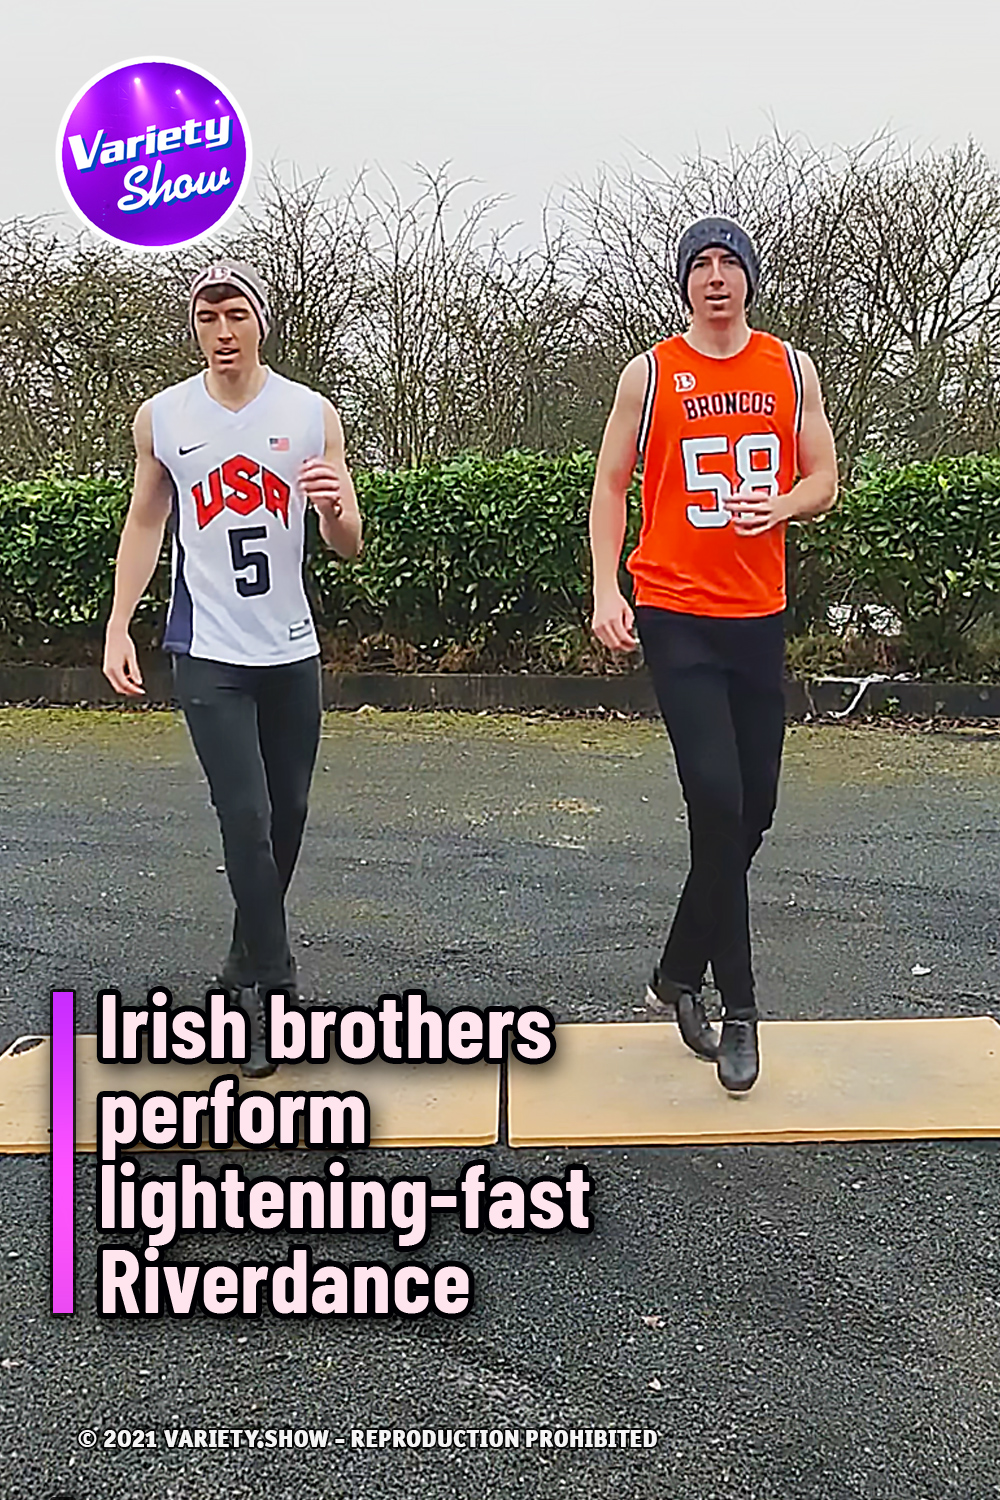 Irish brothers perform lightening-fast Riverdance